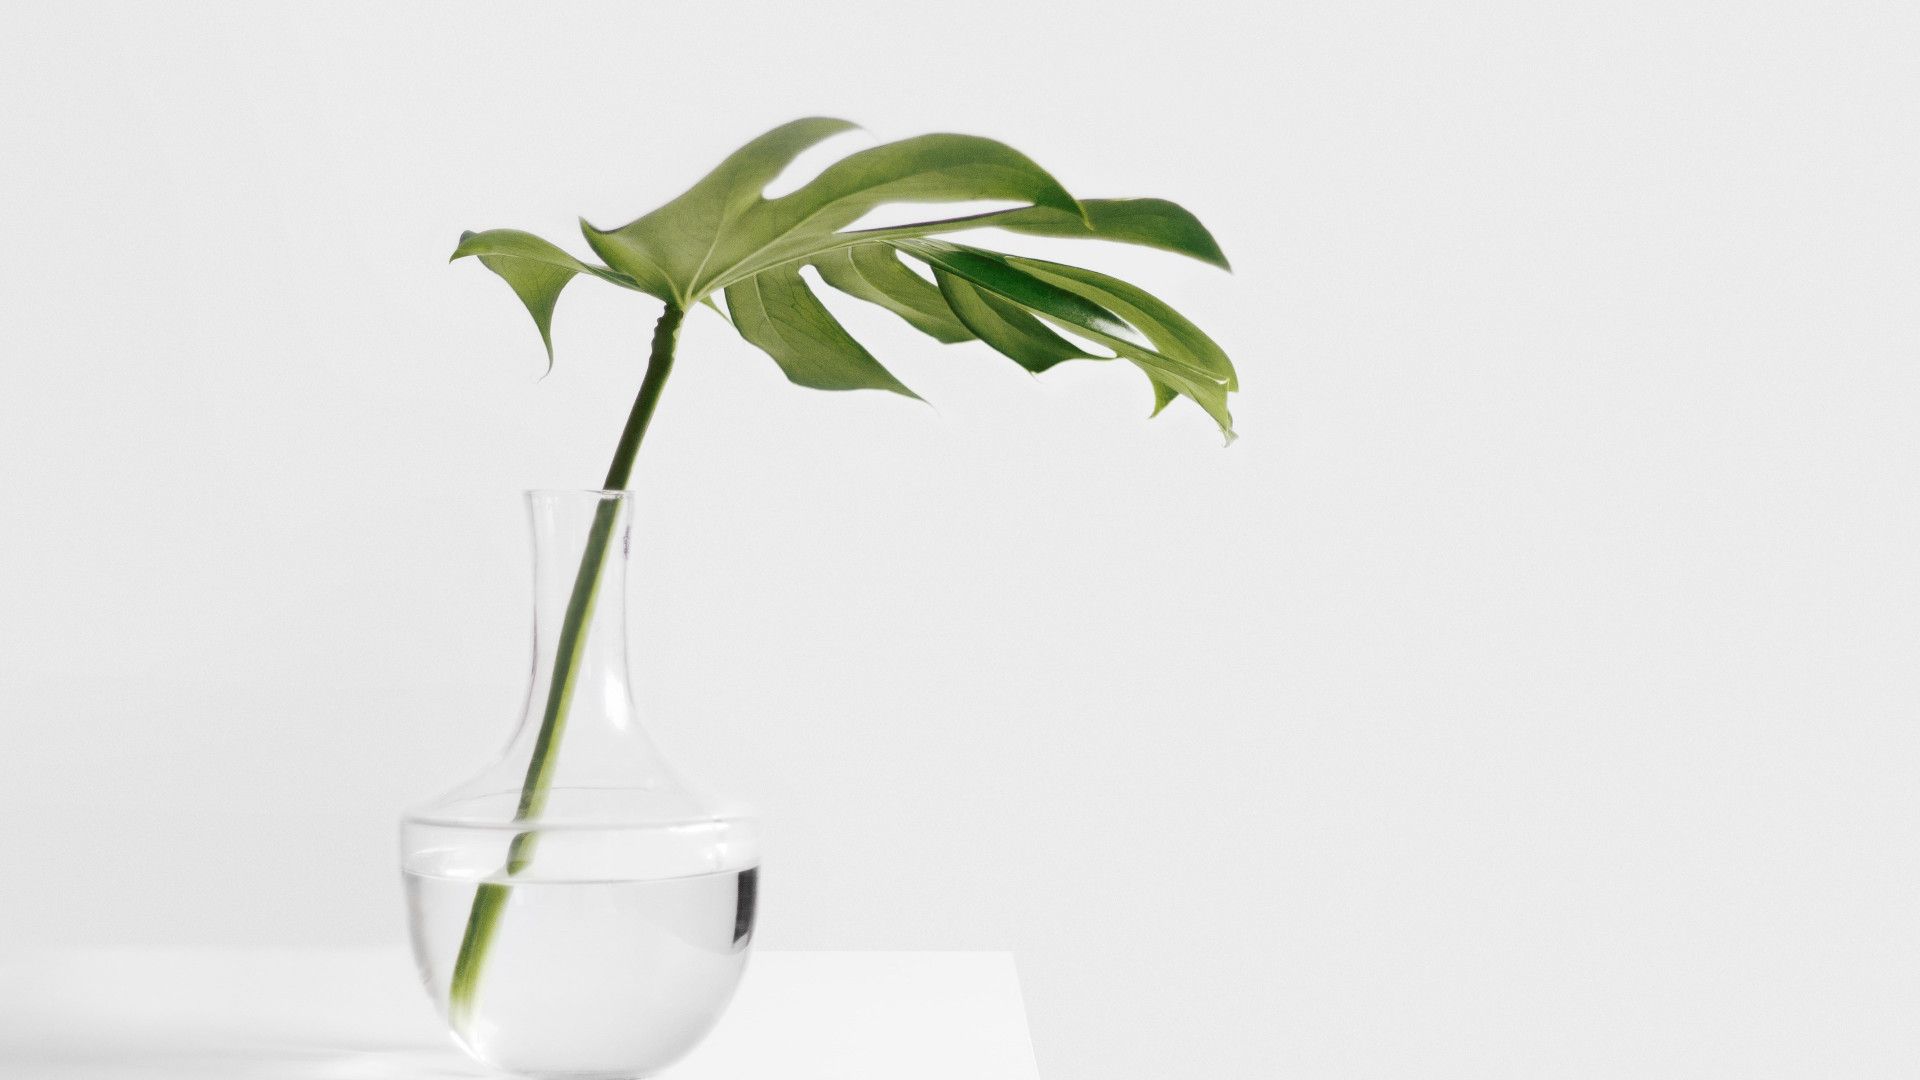 Minimalist Tumblr Plants Desktop Wallpapers